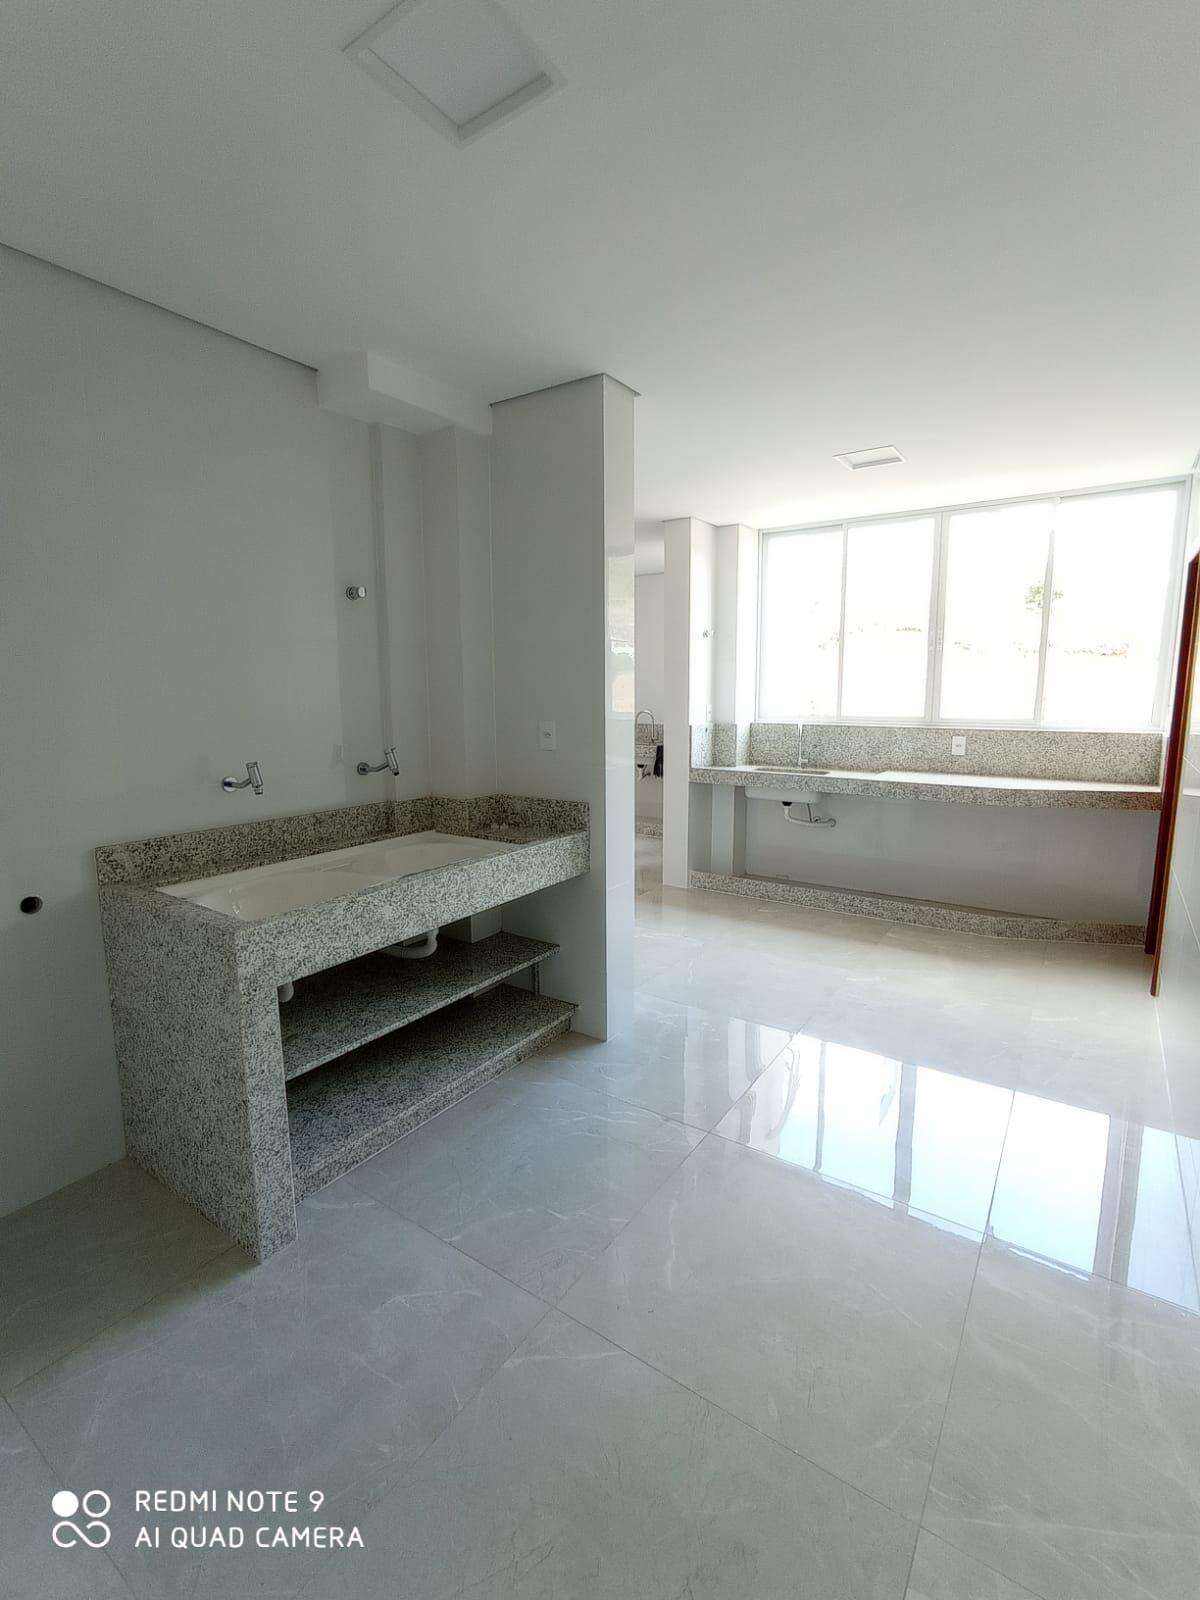 Apartamento 3 quartos para aluguel no Rafael José de Lima: f185f2a4-8-whatsapp-image-2023-06-05-at-12.52.01-1.jpeg